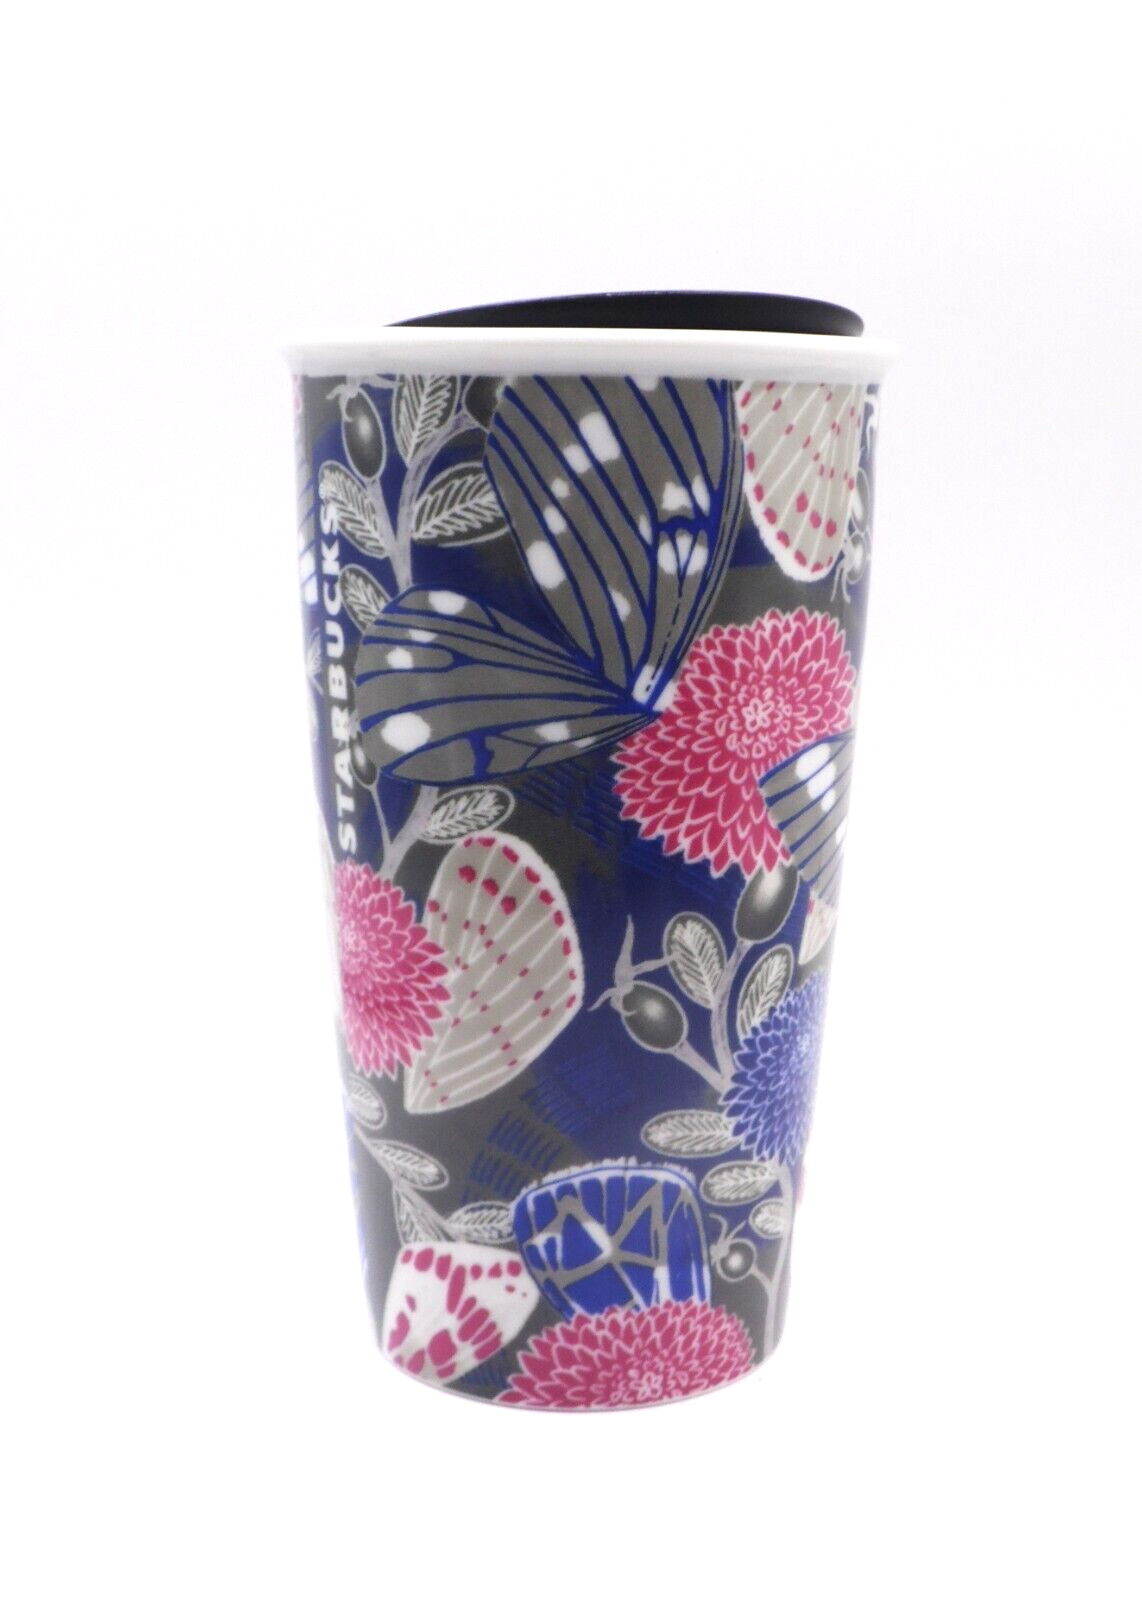 Starbucks 2019 Fall Flora Butterfly Floral Ceramic Travel Tumbler Mug 12oz w Lid